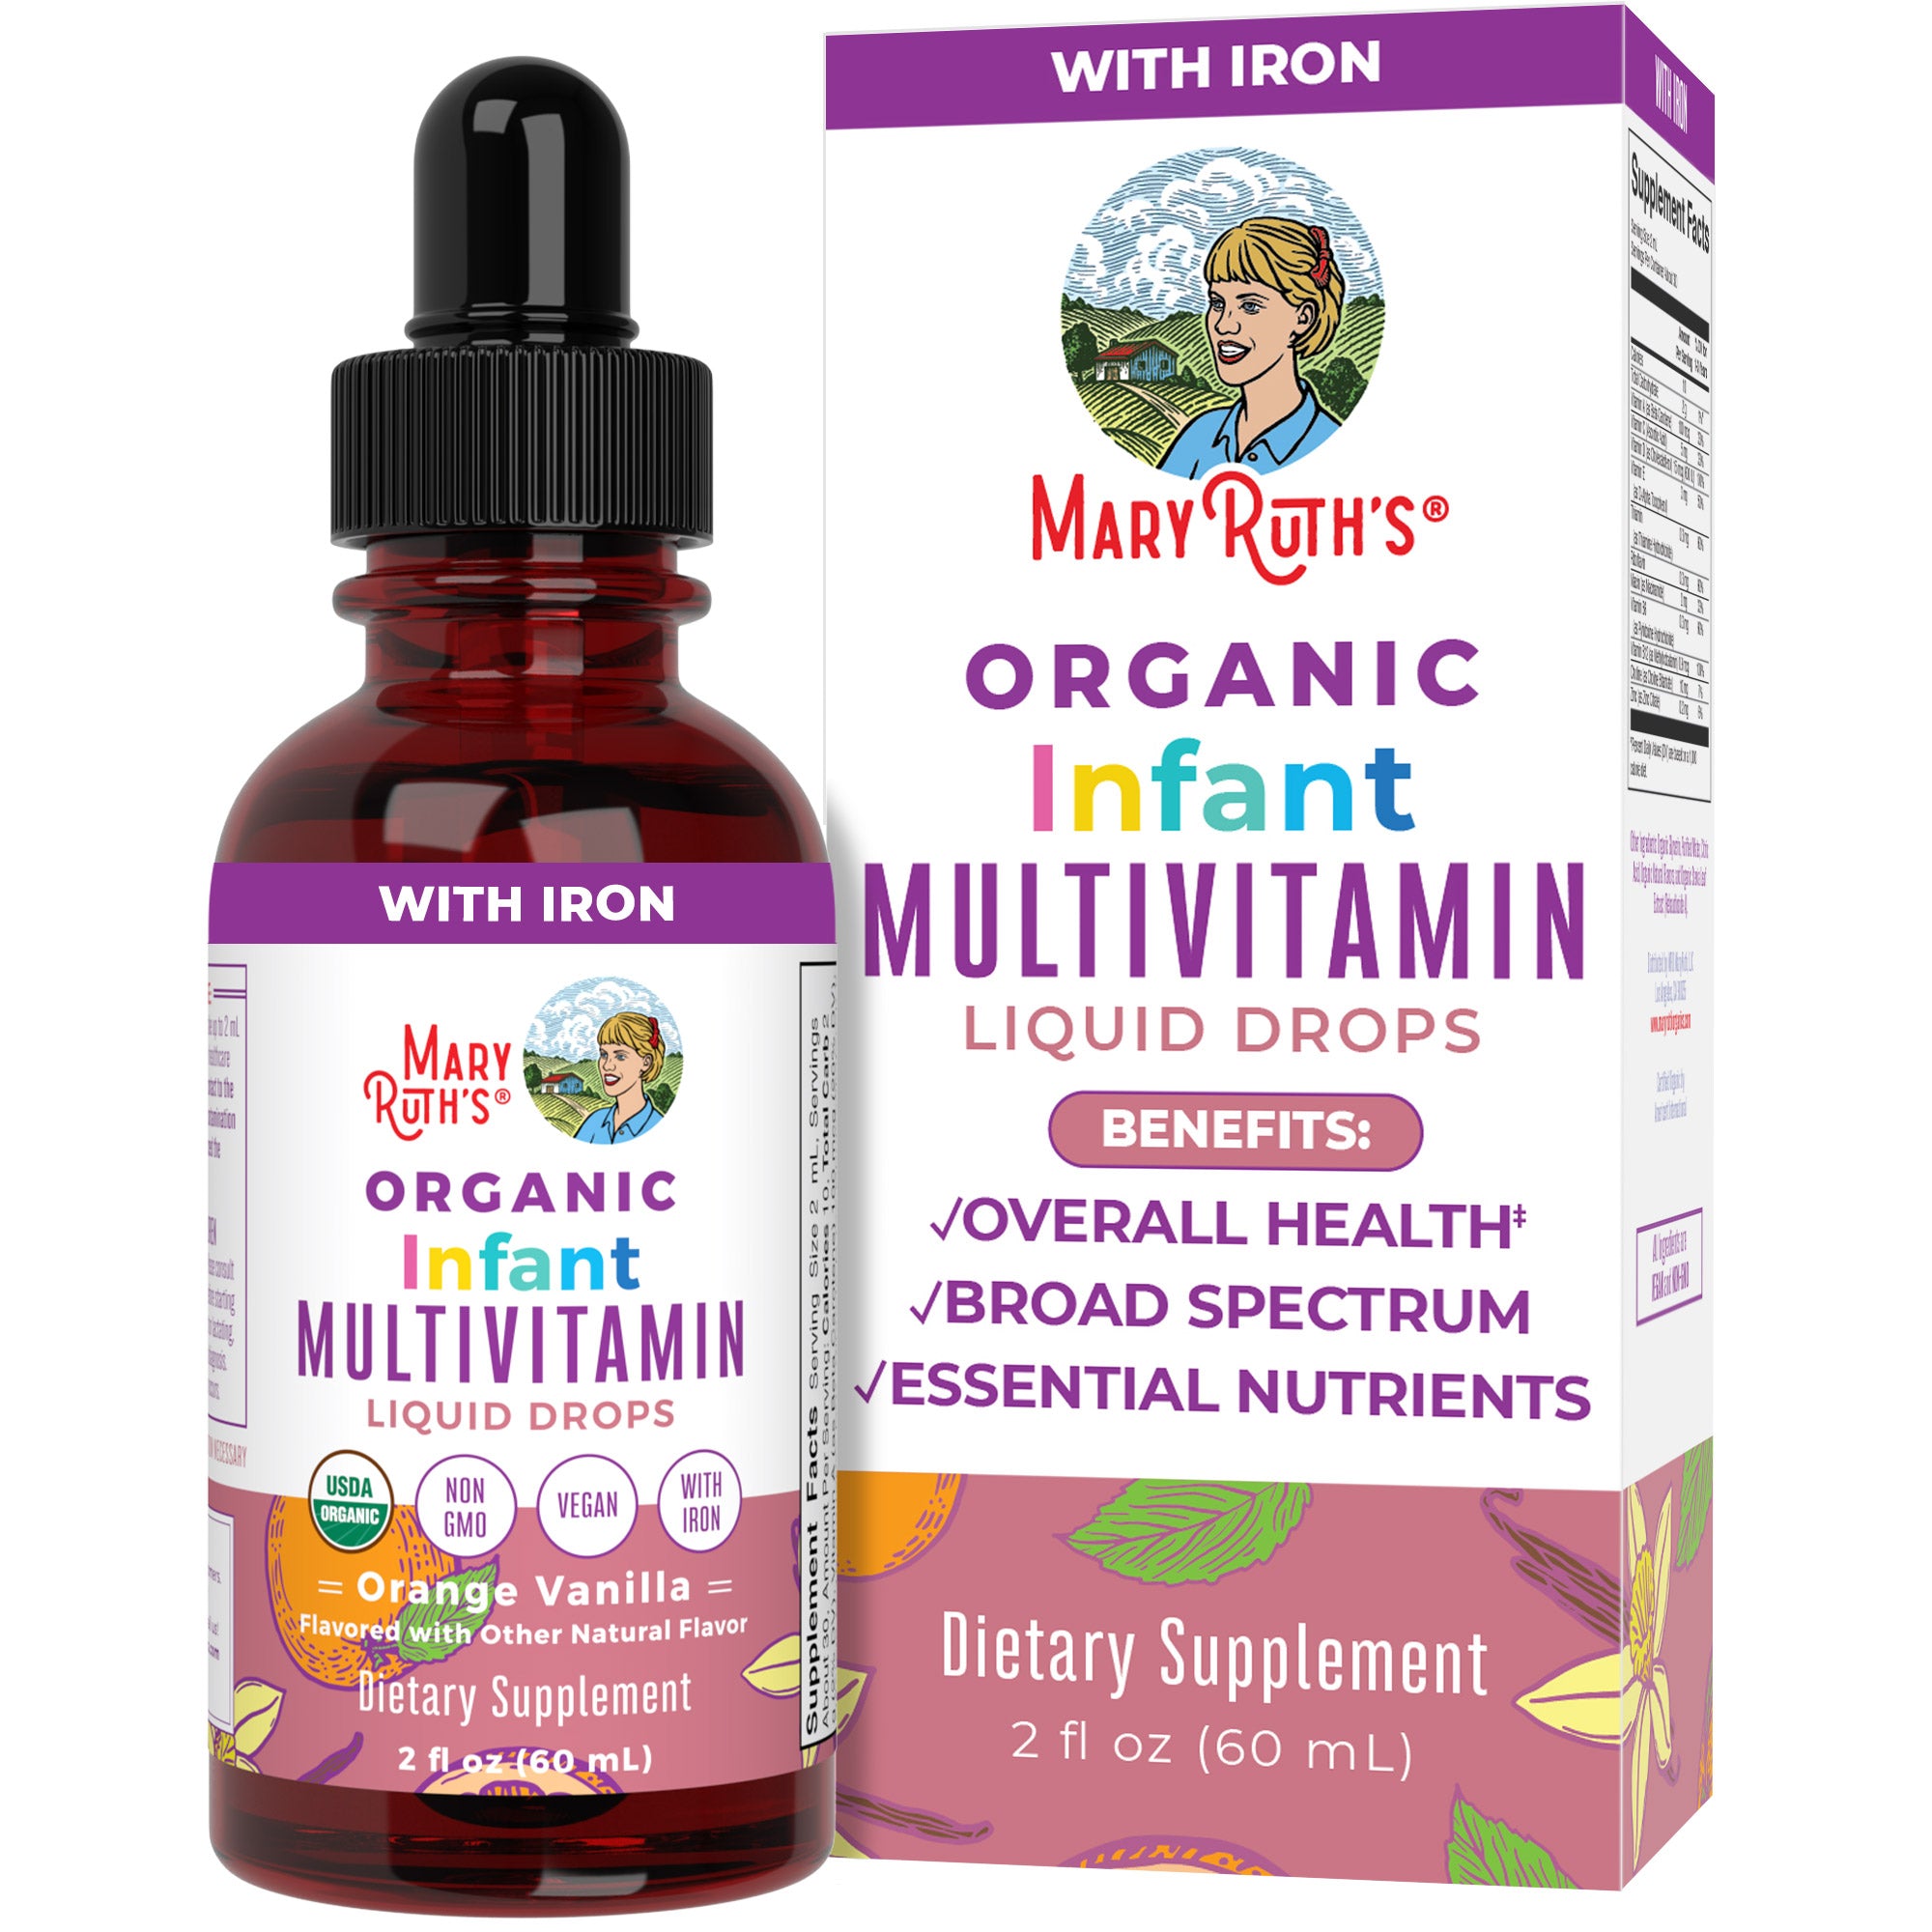 Organic Infant Multivitamin with Iron Liquid Drops